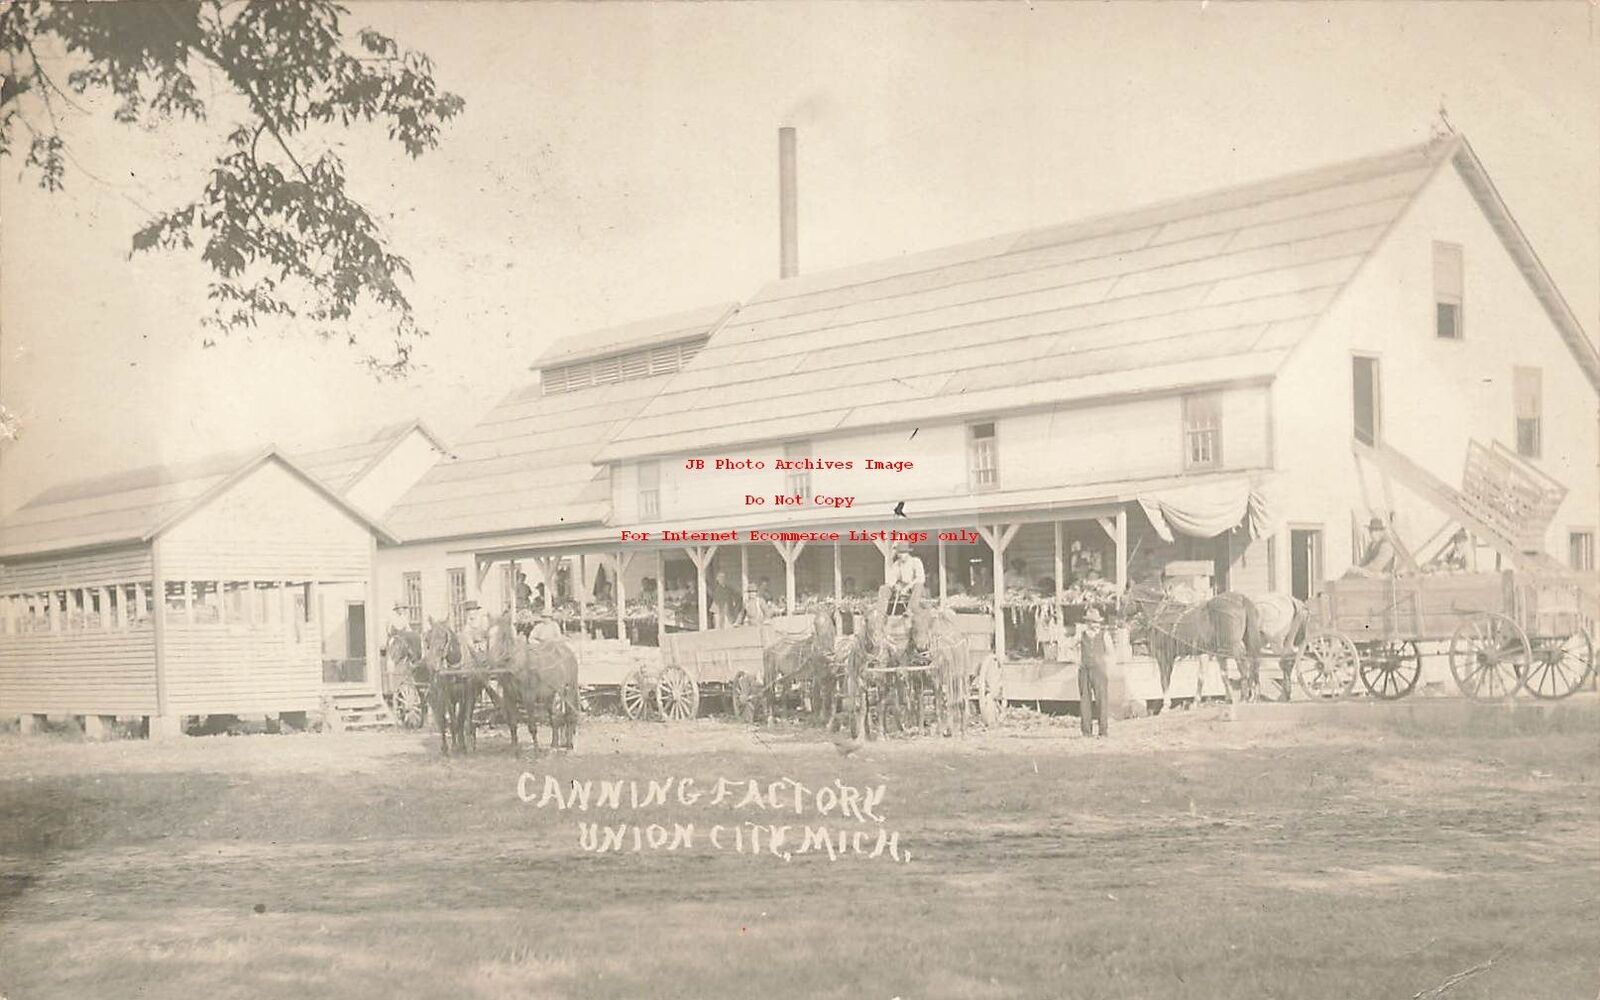 MI, Union City, Michigan, RPPC, Canning Factory, Exterior, 1910 PM, Photo